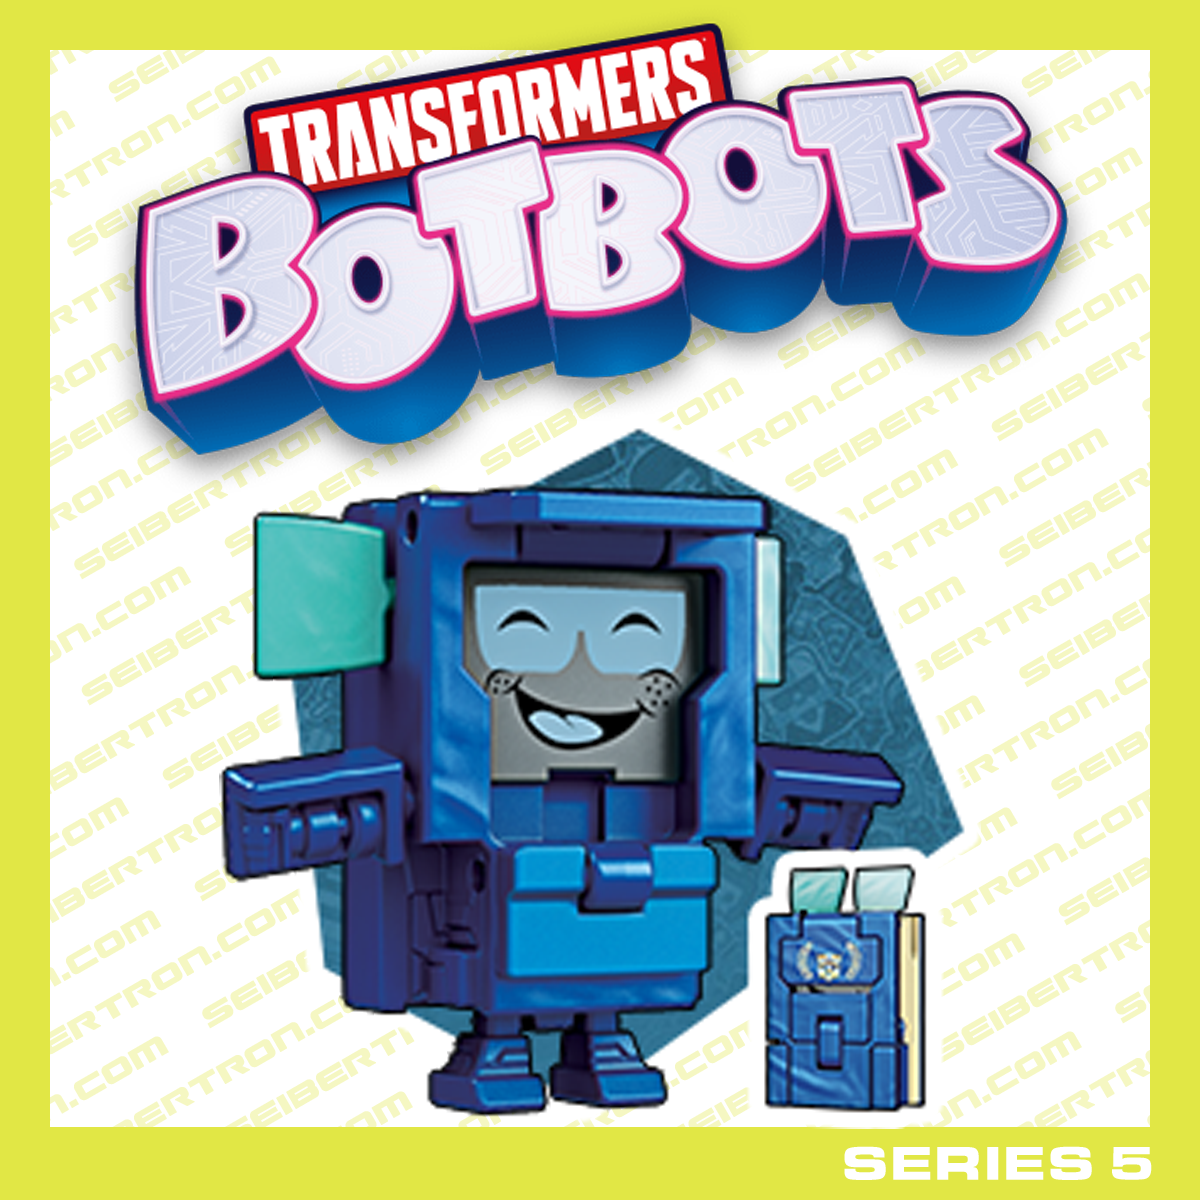 JET SETTER Transformers BotBots Series 5 Frequent Flyers passport Hasbro 2020